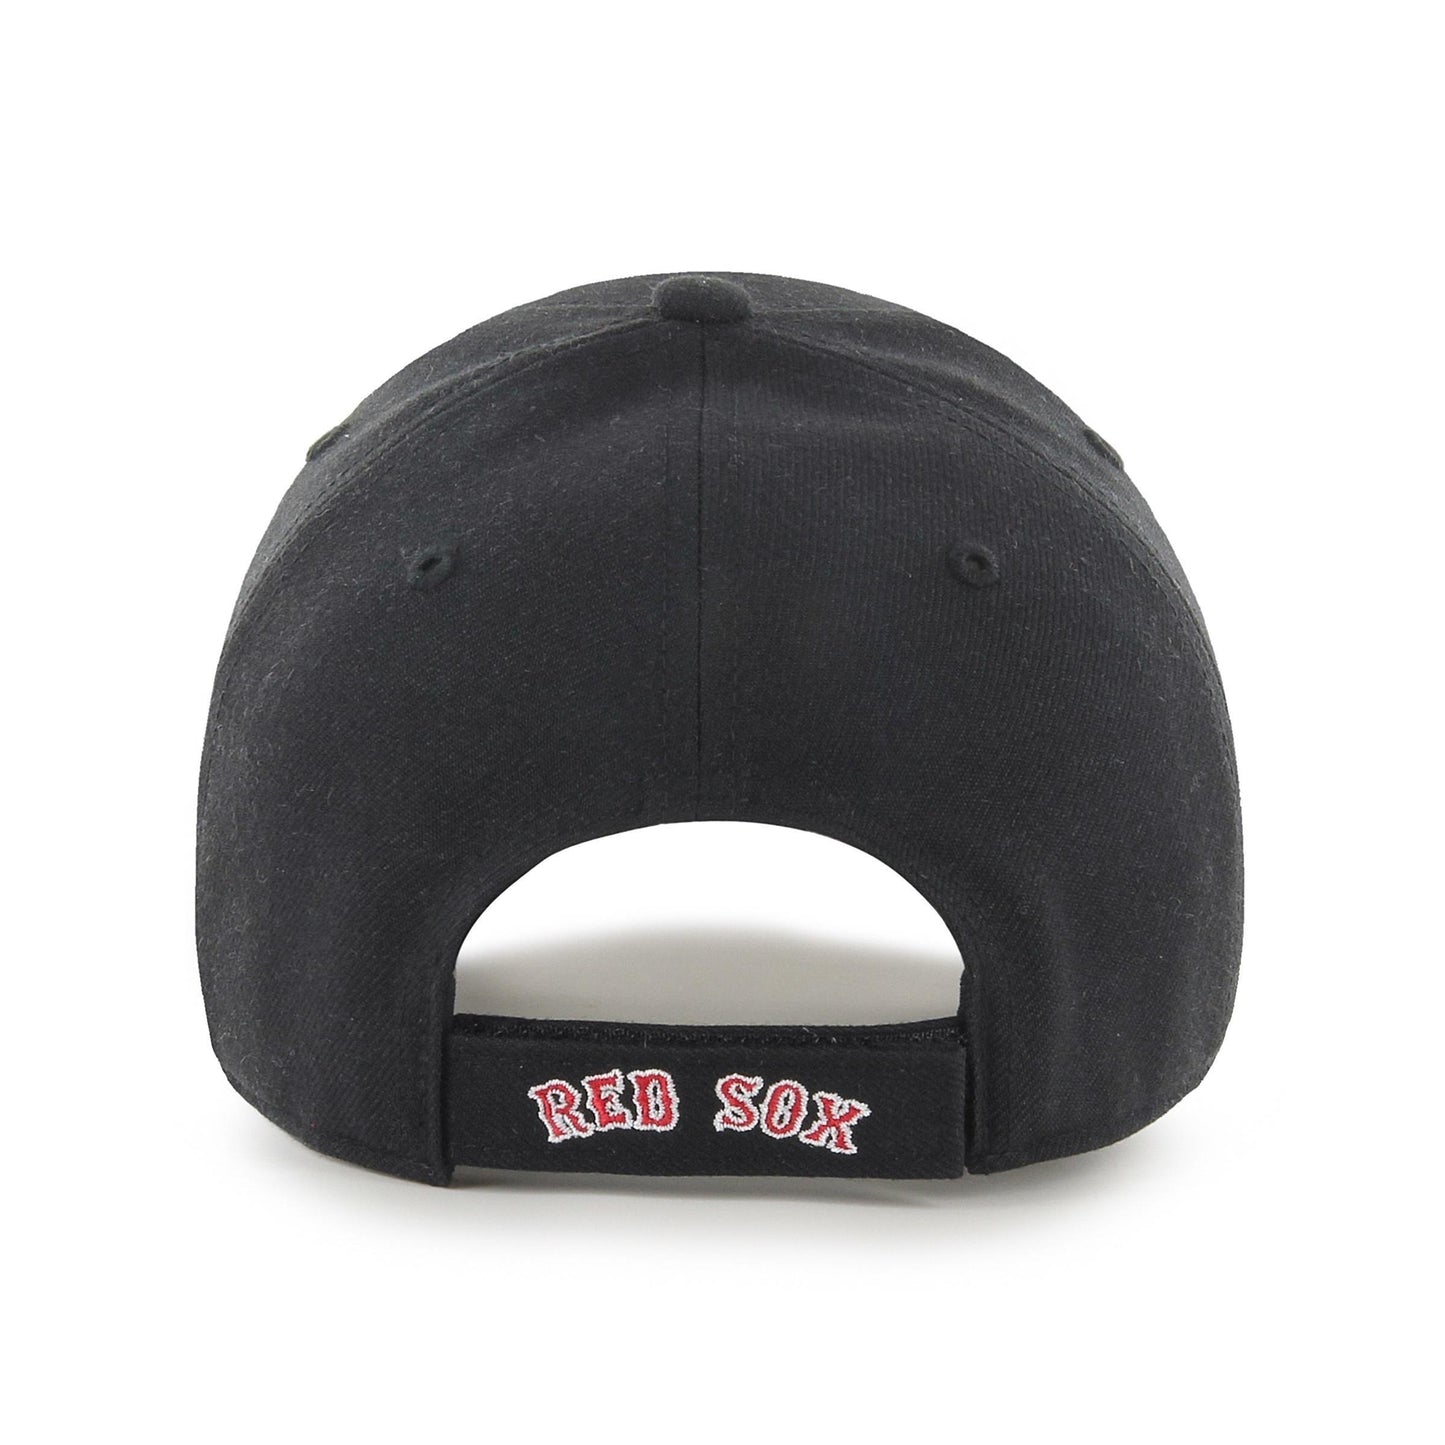 MLB BOSTON RED SOX '47 MVP CAP BLACK